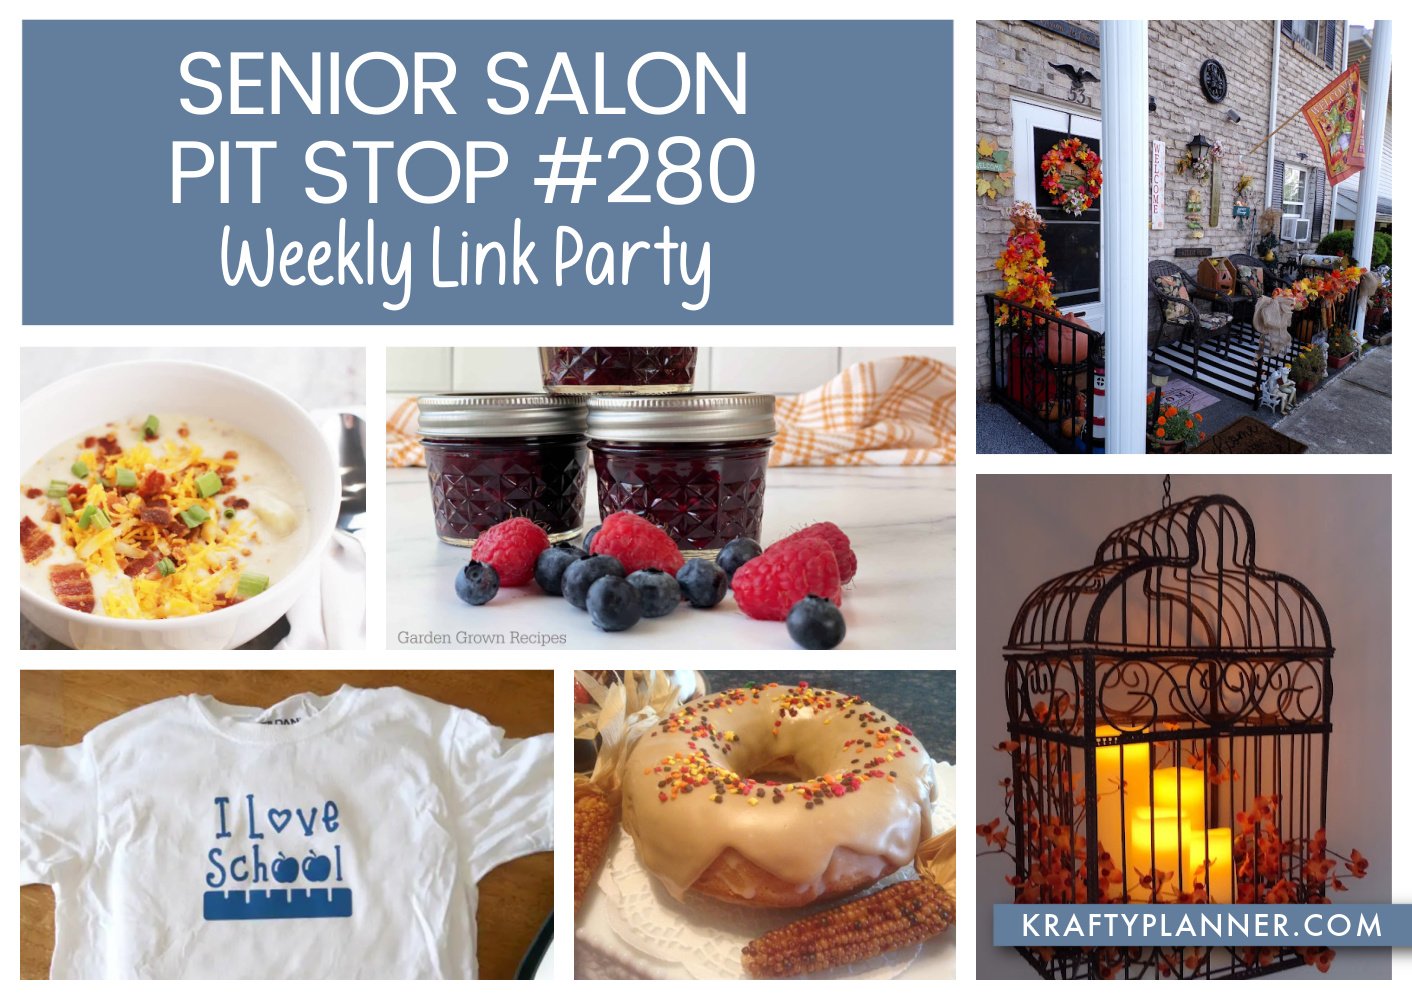 Senior Salon Pit Stop #280